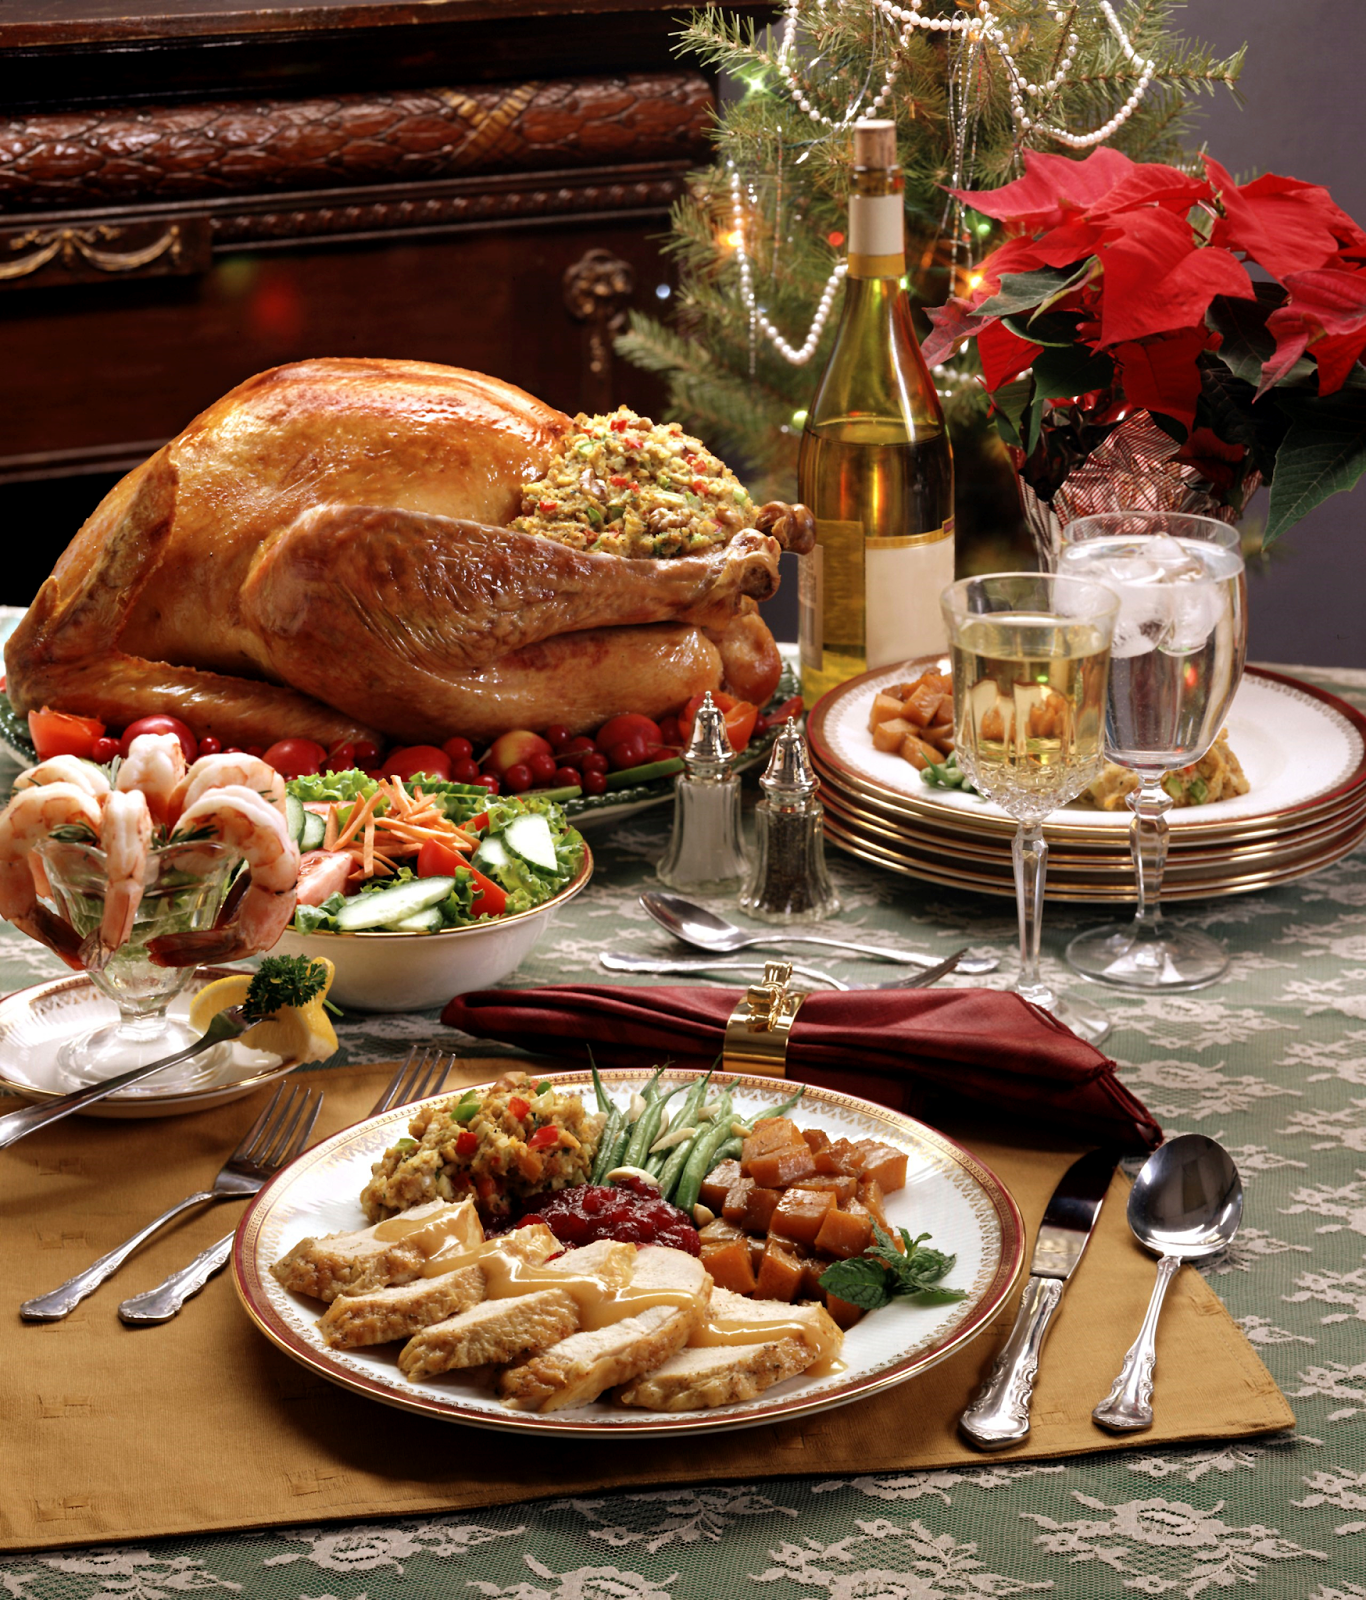 Celebrate Thanksgiving in Nostalgia - Occasions of JOY